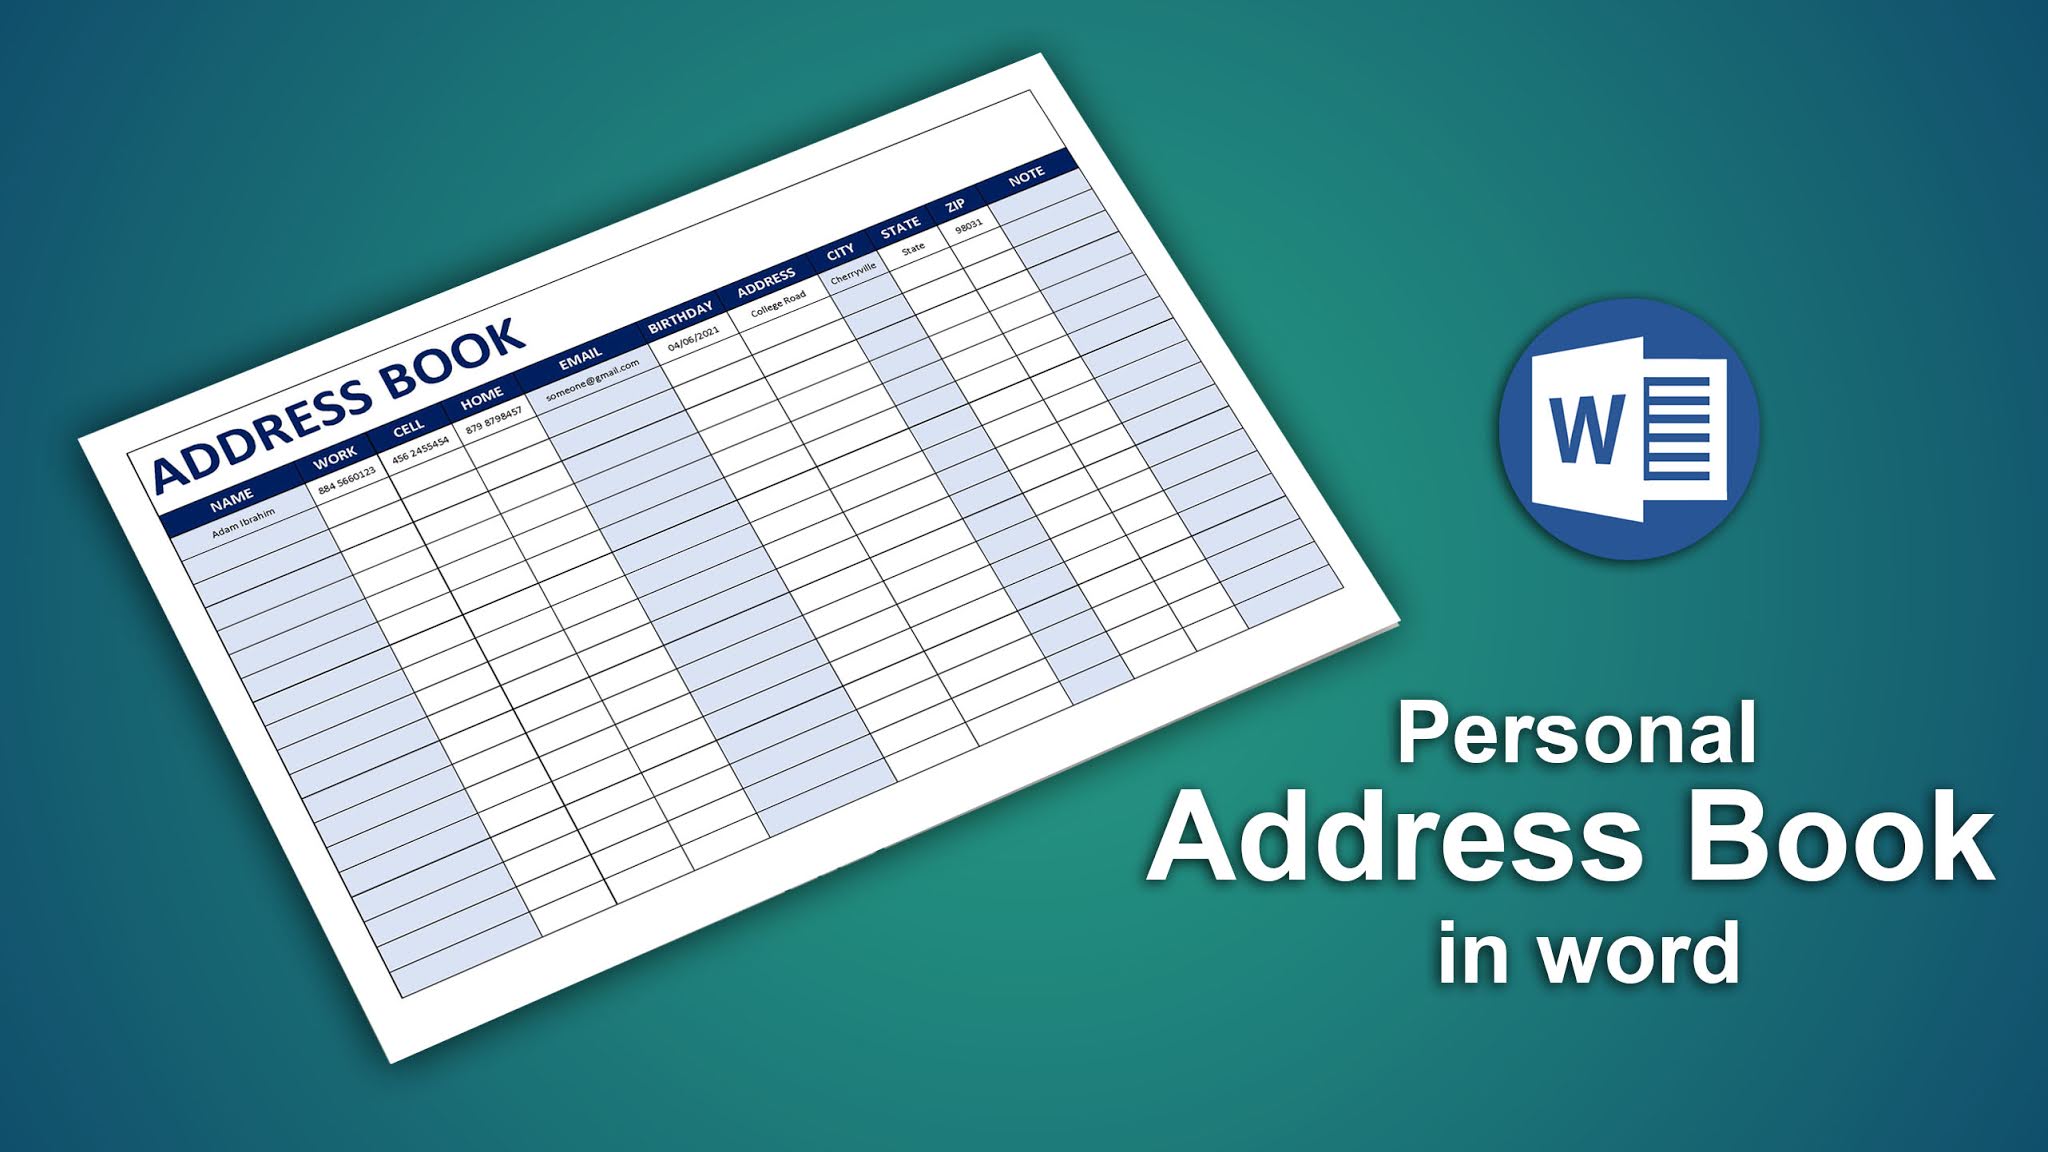 Addressbook. Personal addresses